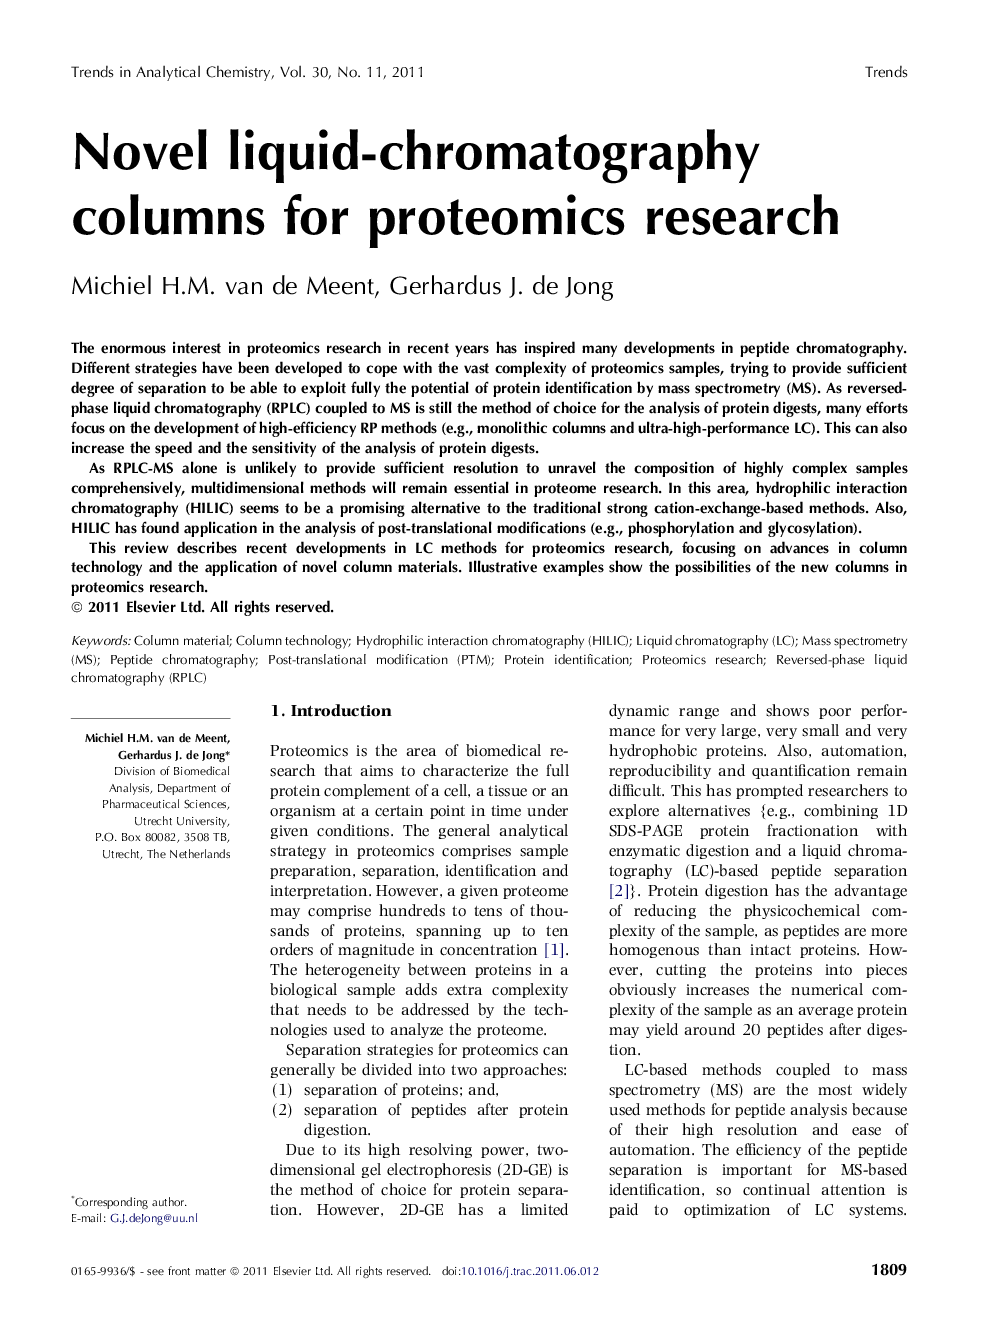 Novel liquid-chromatography columns for proteomics research